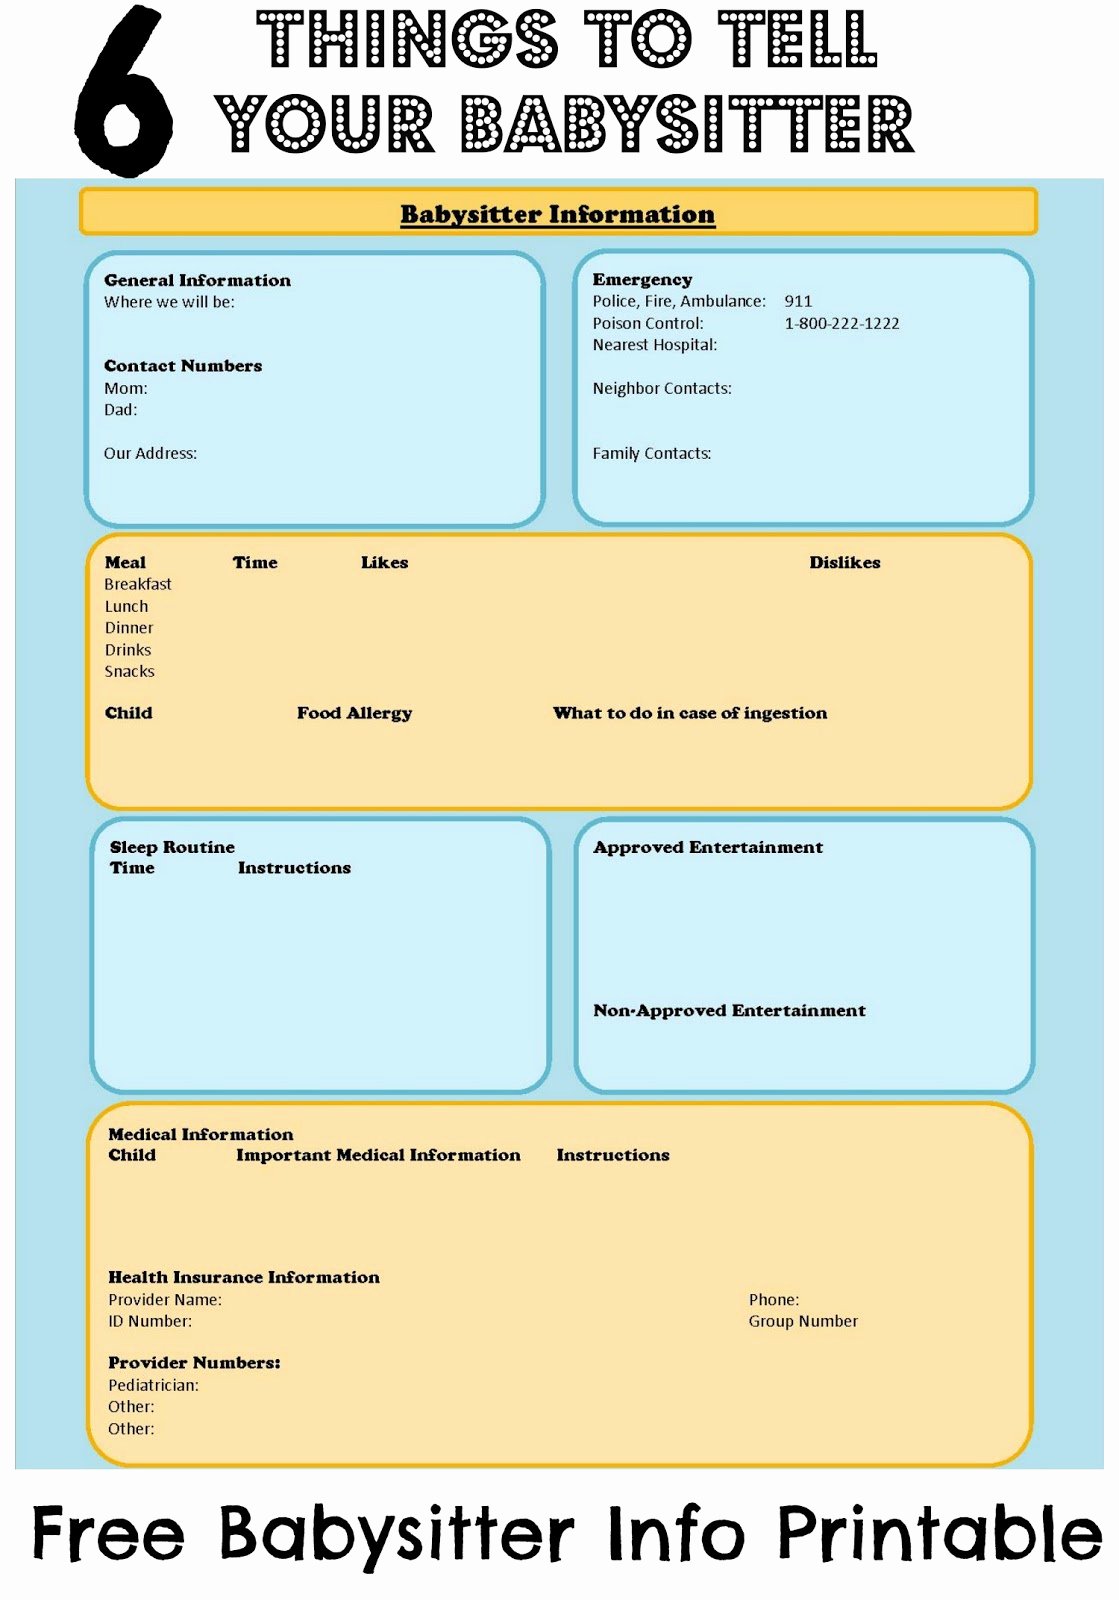 Babysitter Emergency Information Sheet Best Of Babysitter Information Sheet with Free Printable – the Bajan Texan